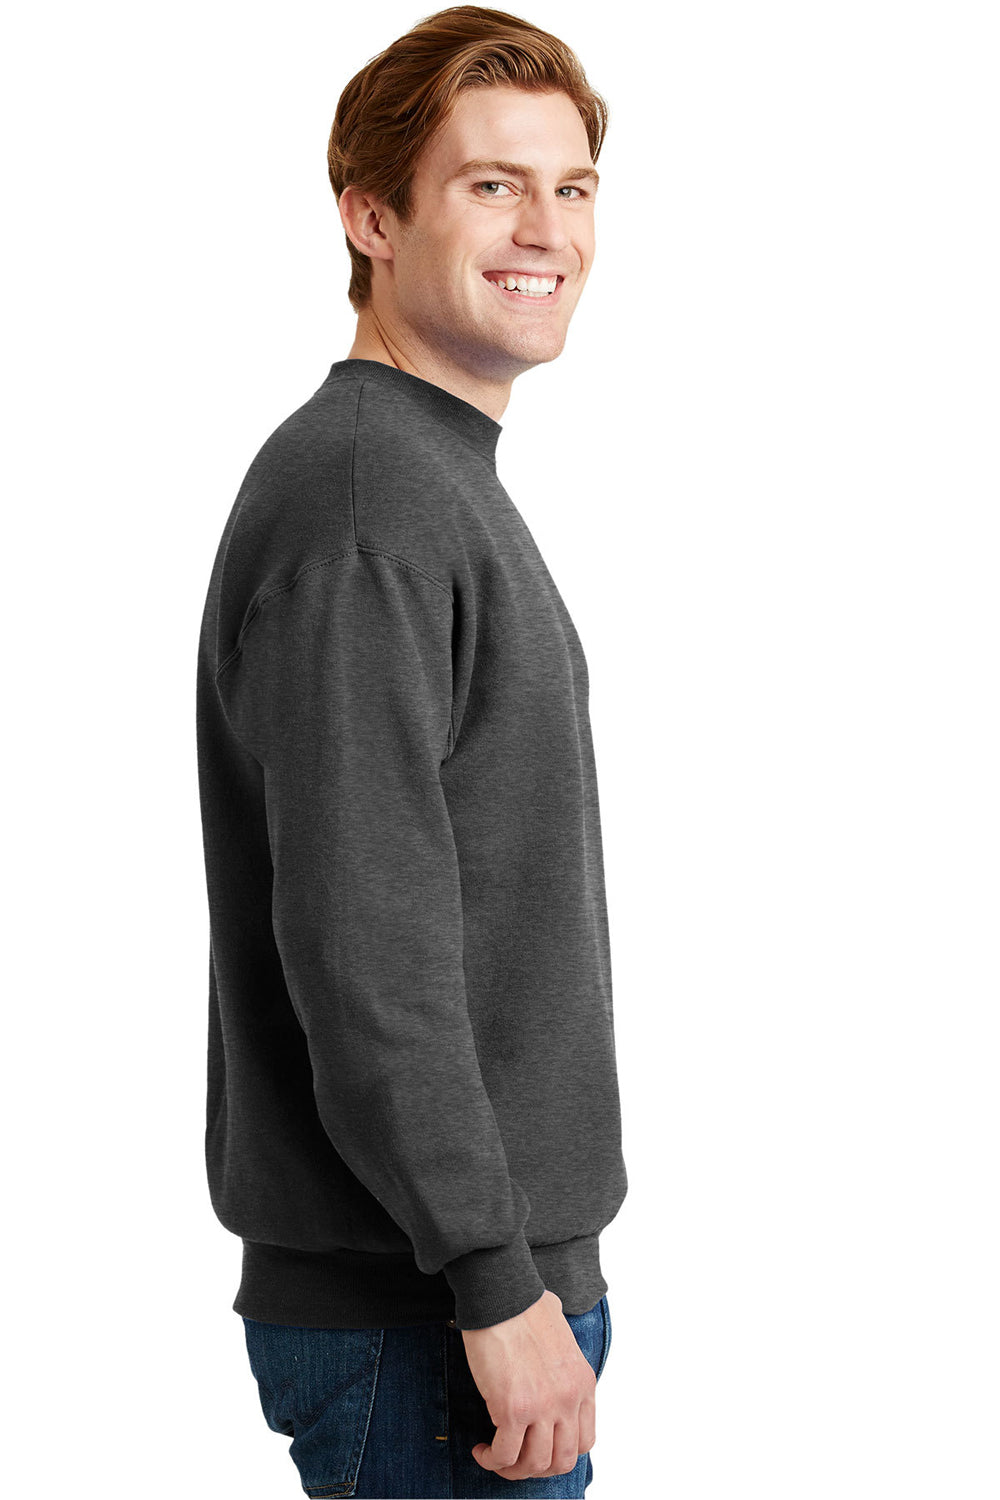 Hanes P160/P1607 Mens EcoSmart Print Pro XP Fleece Crewneck Sweatshirt Heather Charcoal Grey Side